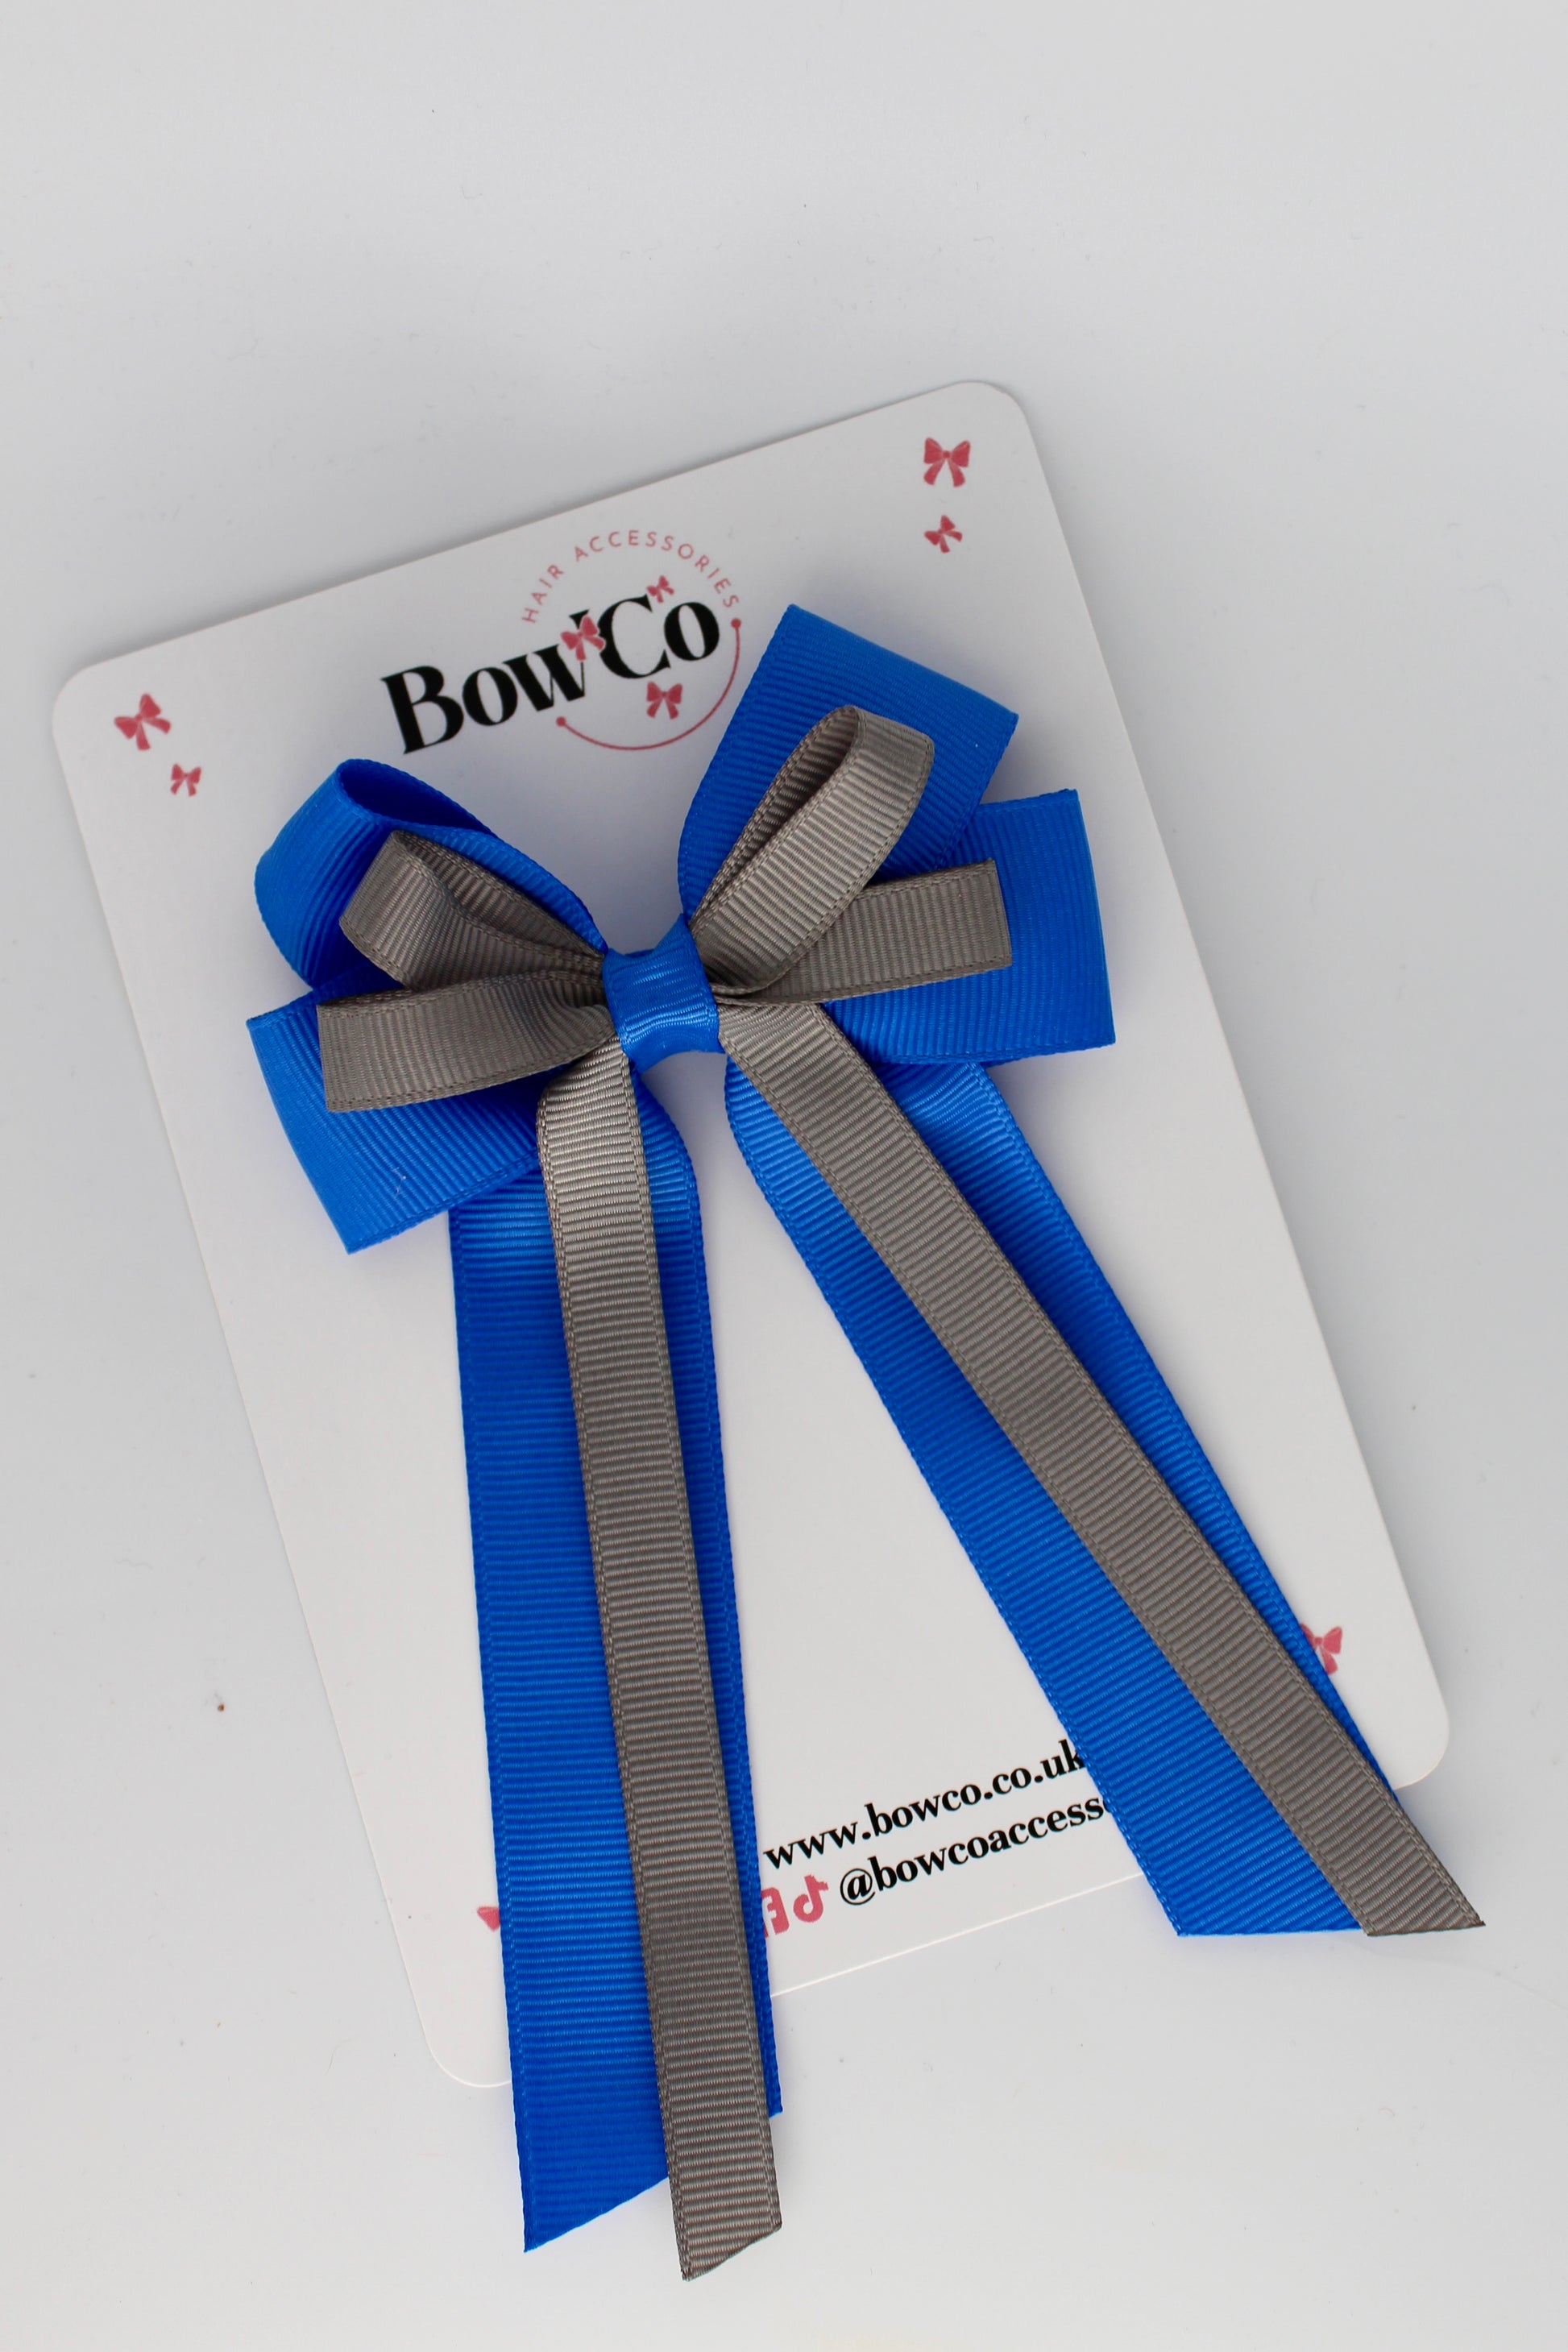 4 Inch Loop Bow Clip PonyTail - Royal Blue and Metal Grey